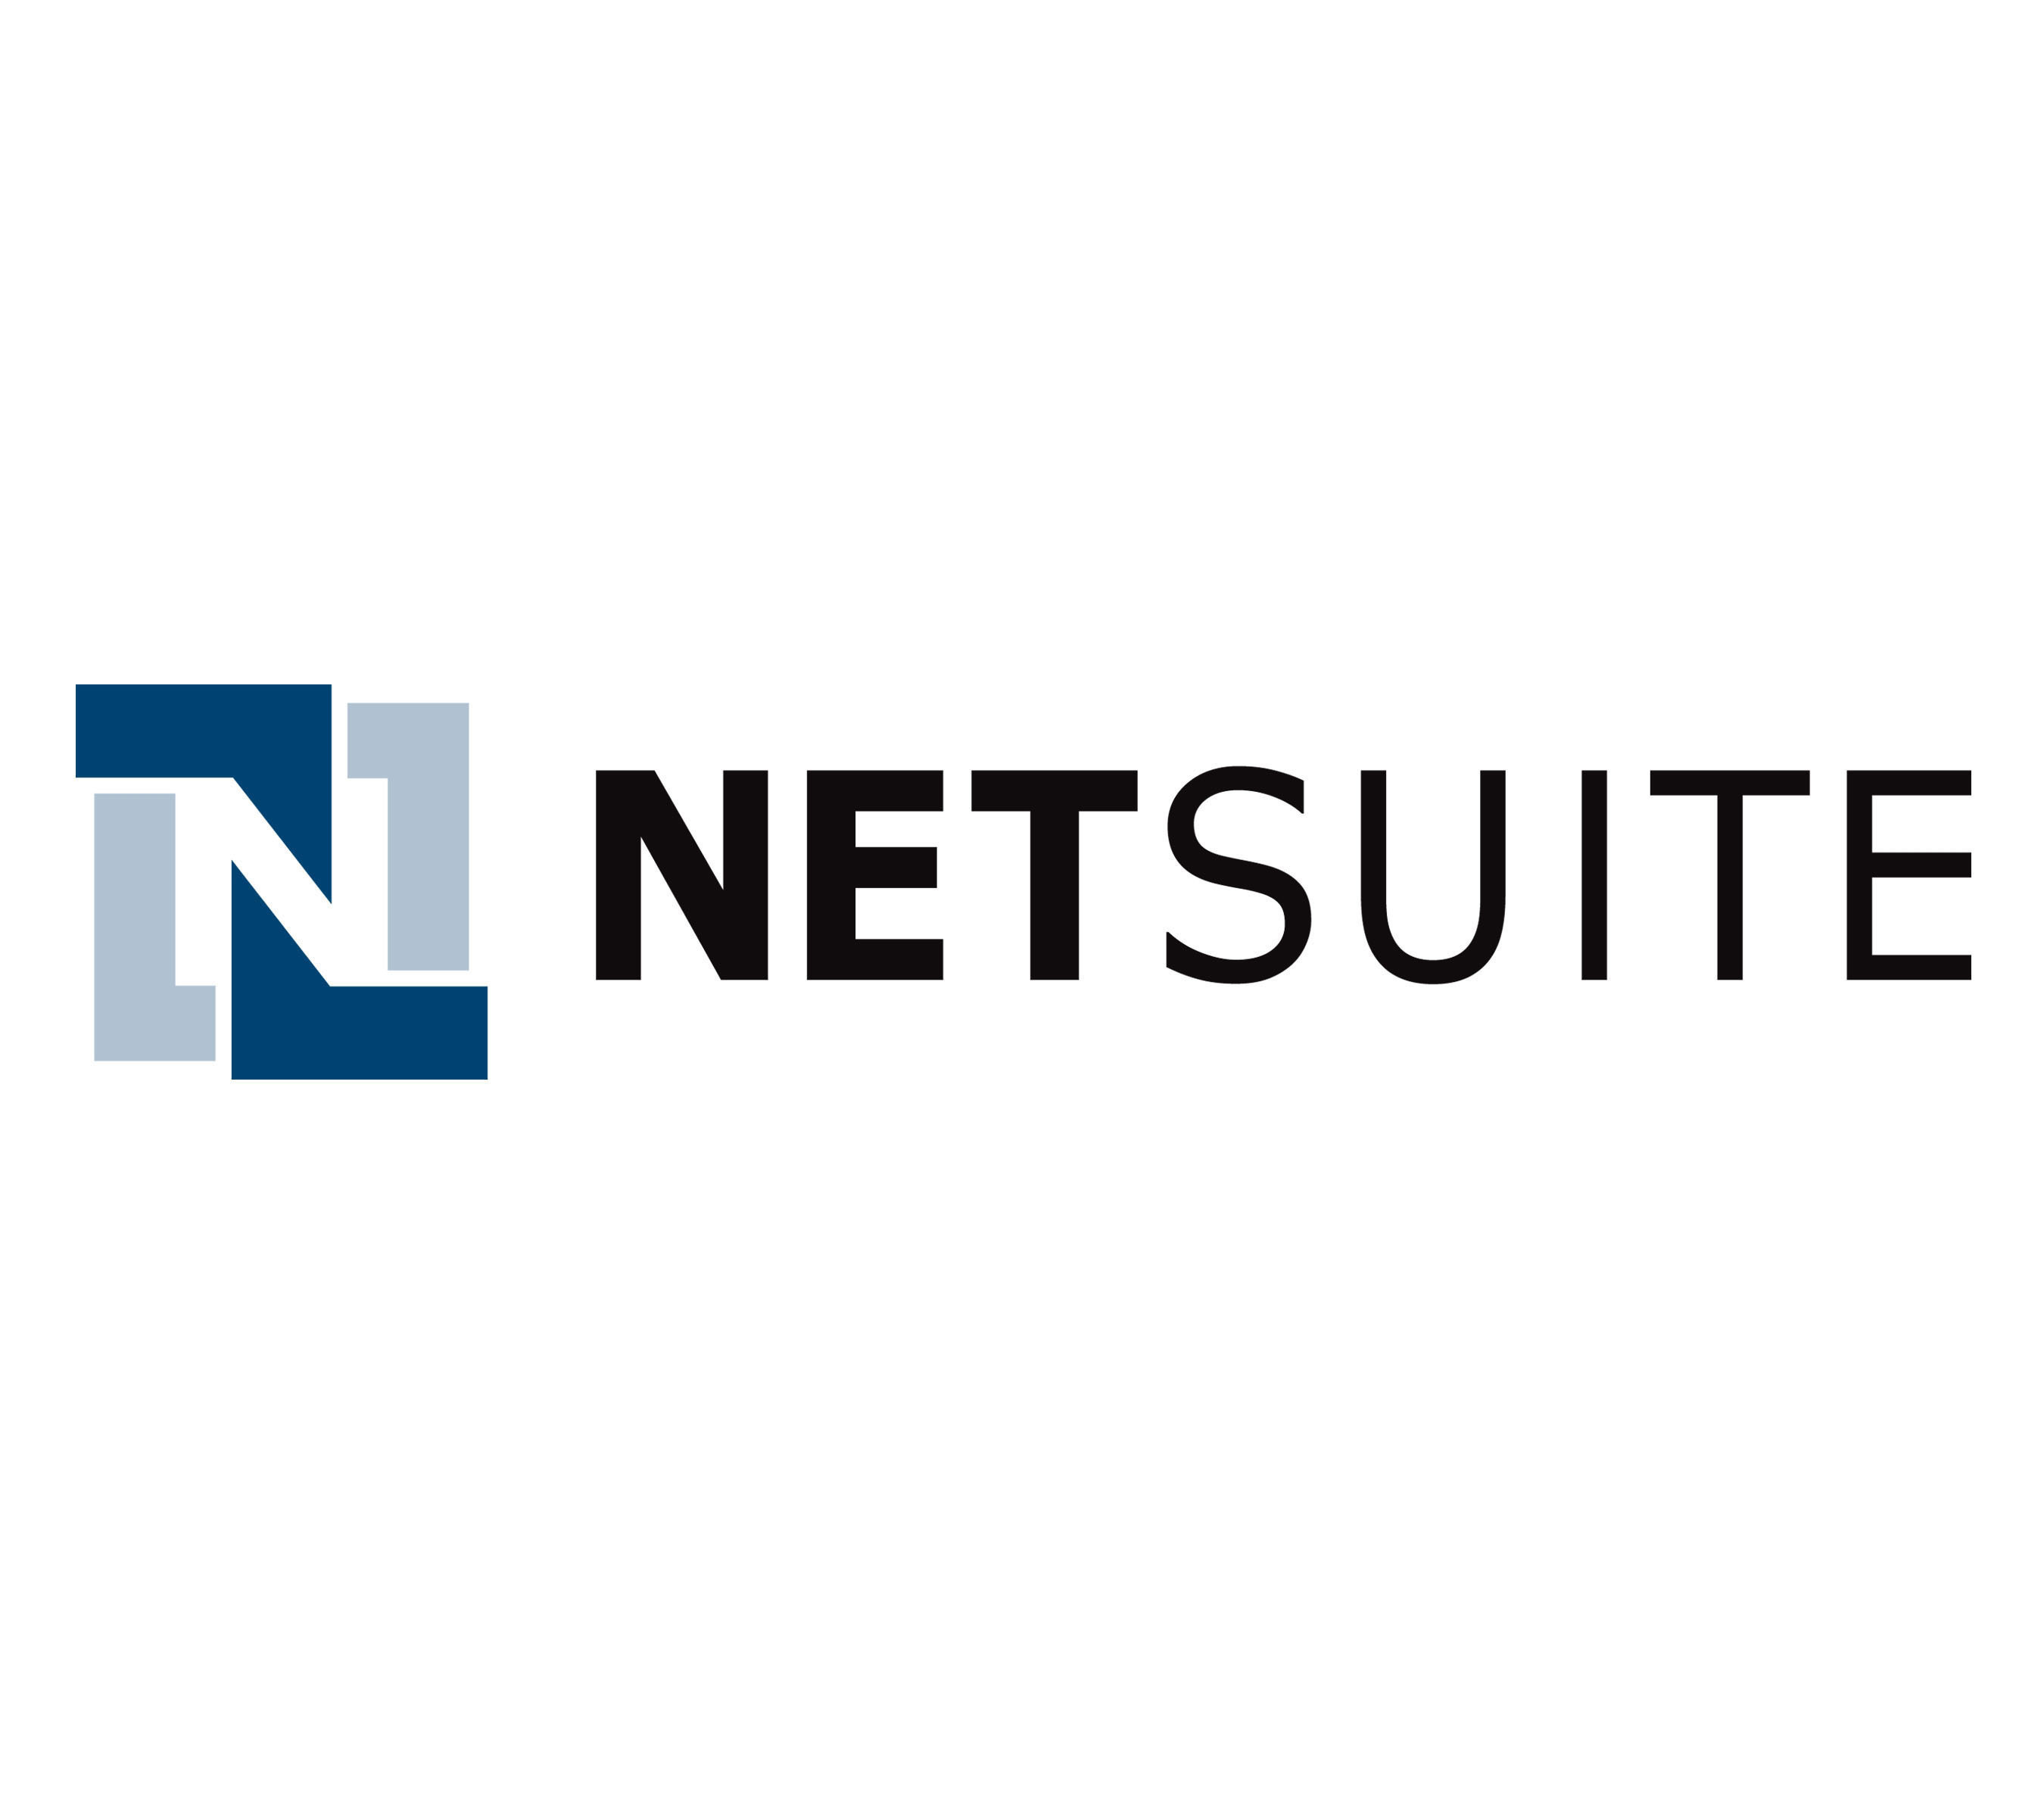 NetSuite. Where Business is Going. (PRNewsFoto/NetSuite Inc.) (PRNewsFoto/)